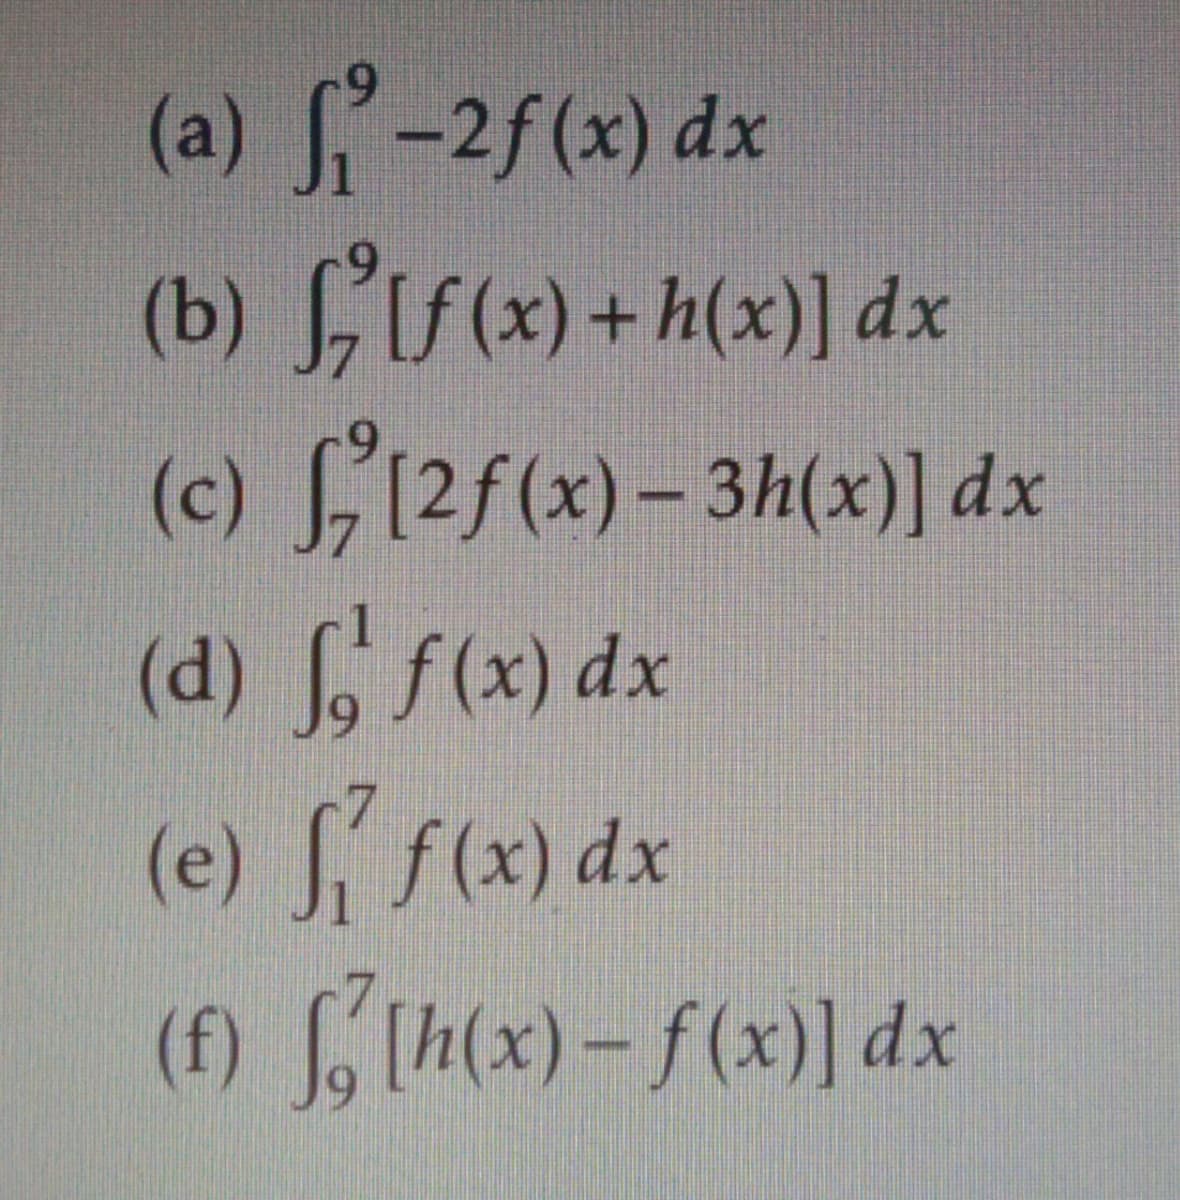 96.
(a) -2f(x) dx
(b) (x) + h(x)] dx
(c) 12f(x)- 3h(x)] dx
|
(d) f(x) dx
(e) f(x) dx
J1
(f) f [h(x)-f(x)] dx
